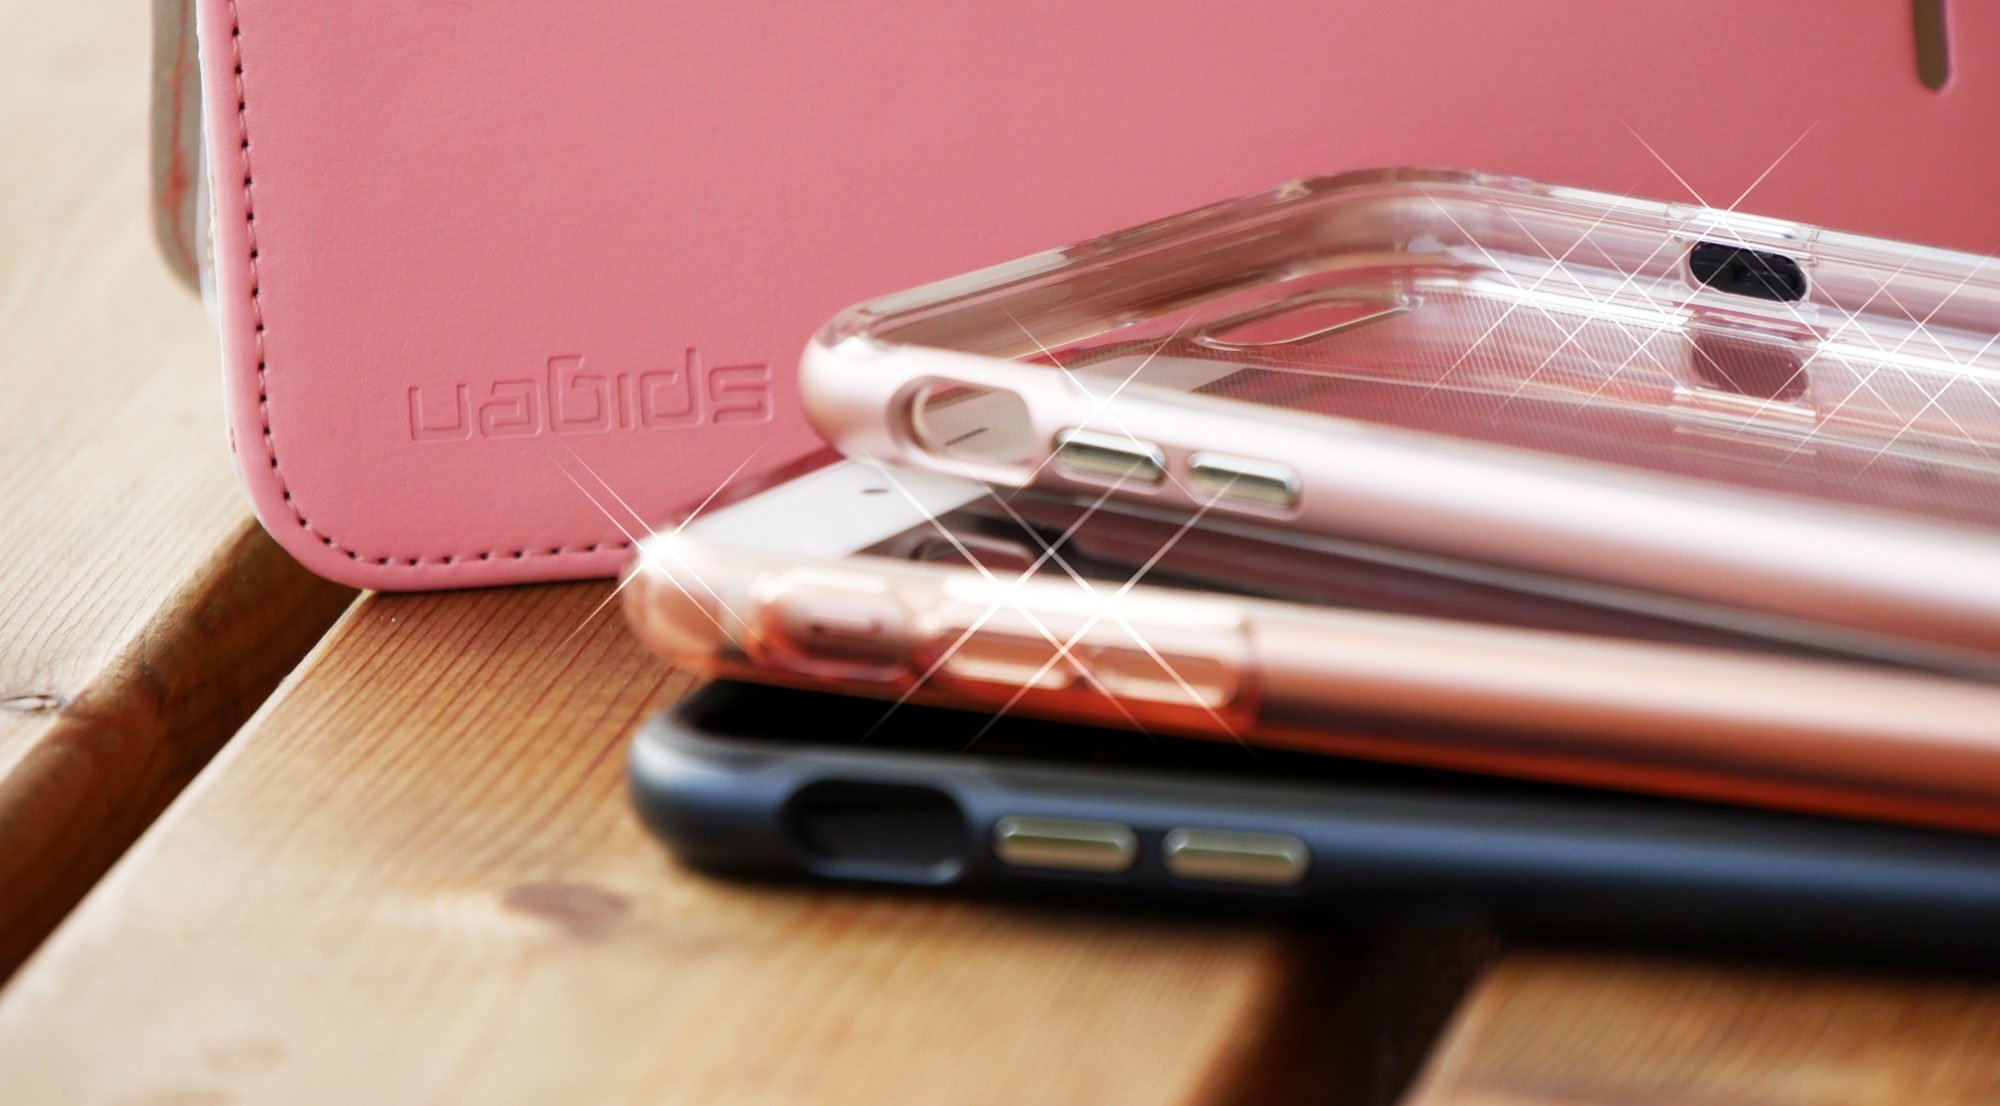 iPhone 6s Hüllen-Test: die besten Cases & Schutzhüllen fürs iPhone 6s & iPhone 6s Plus 14